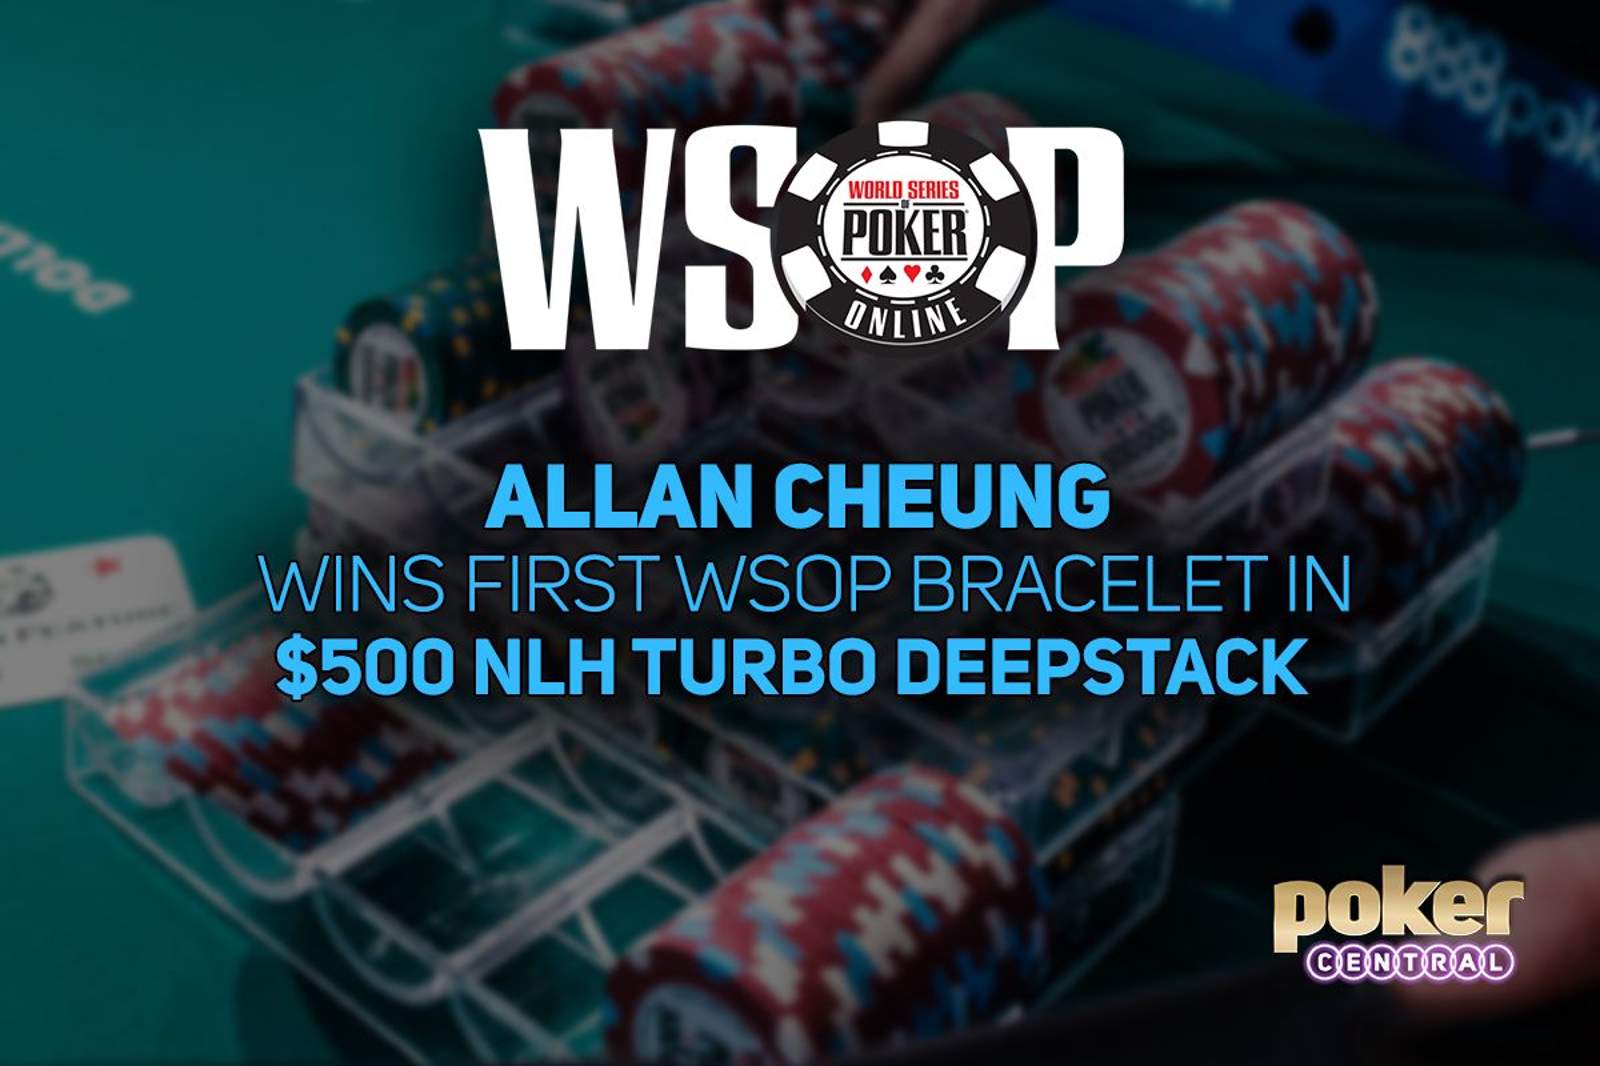 Allan Cheung Wins First Bracelet in WSOP Online $500 Turbo Deepstack for $120,083